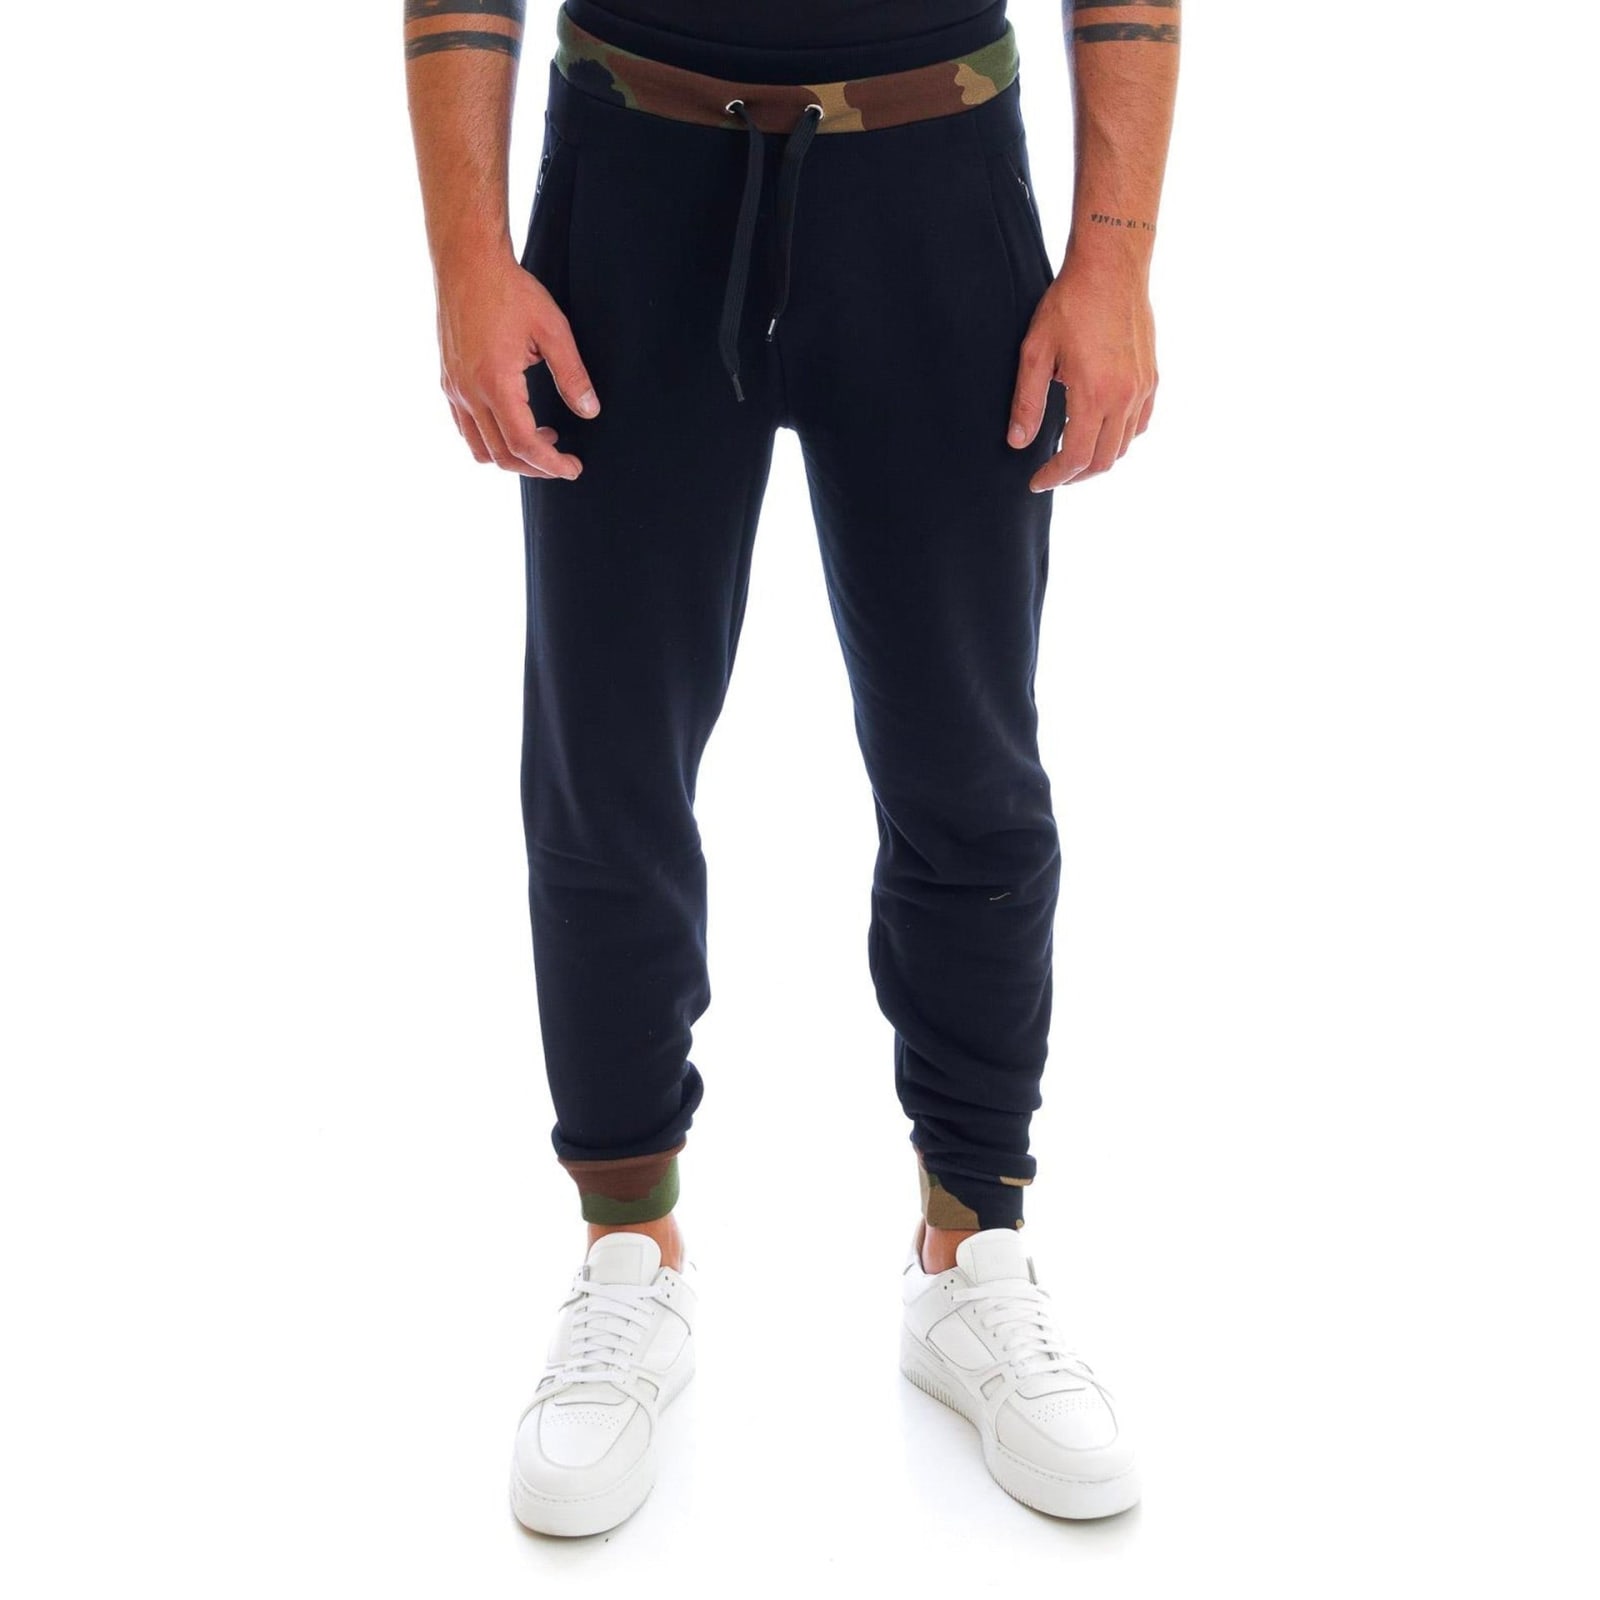 Shop Moschino Underwear Jogging Style Pants In Black